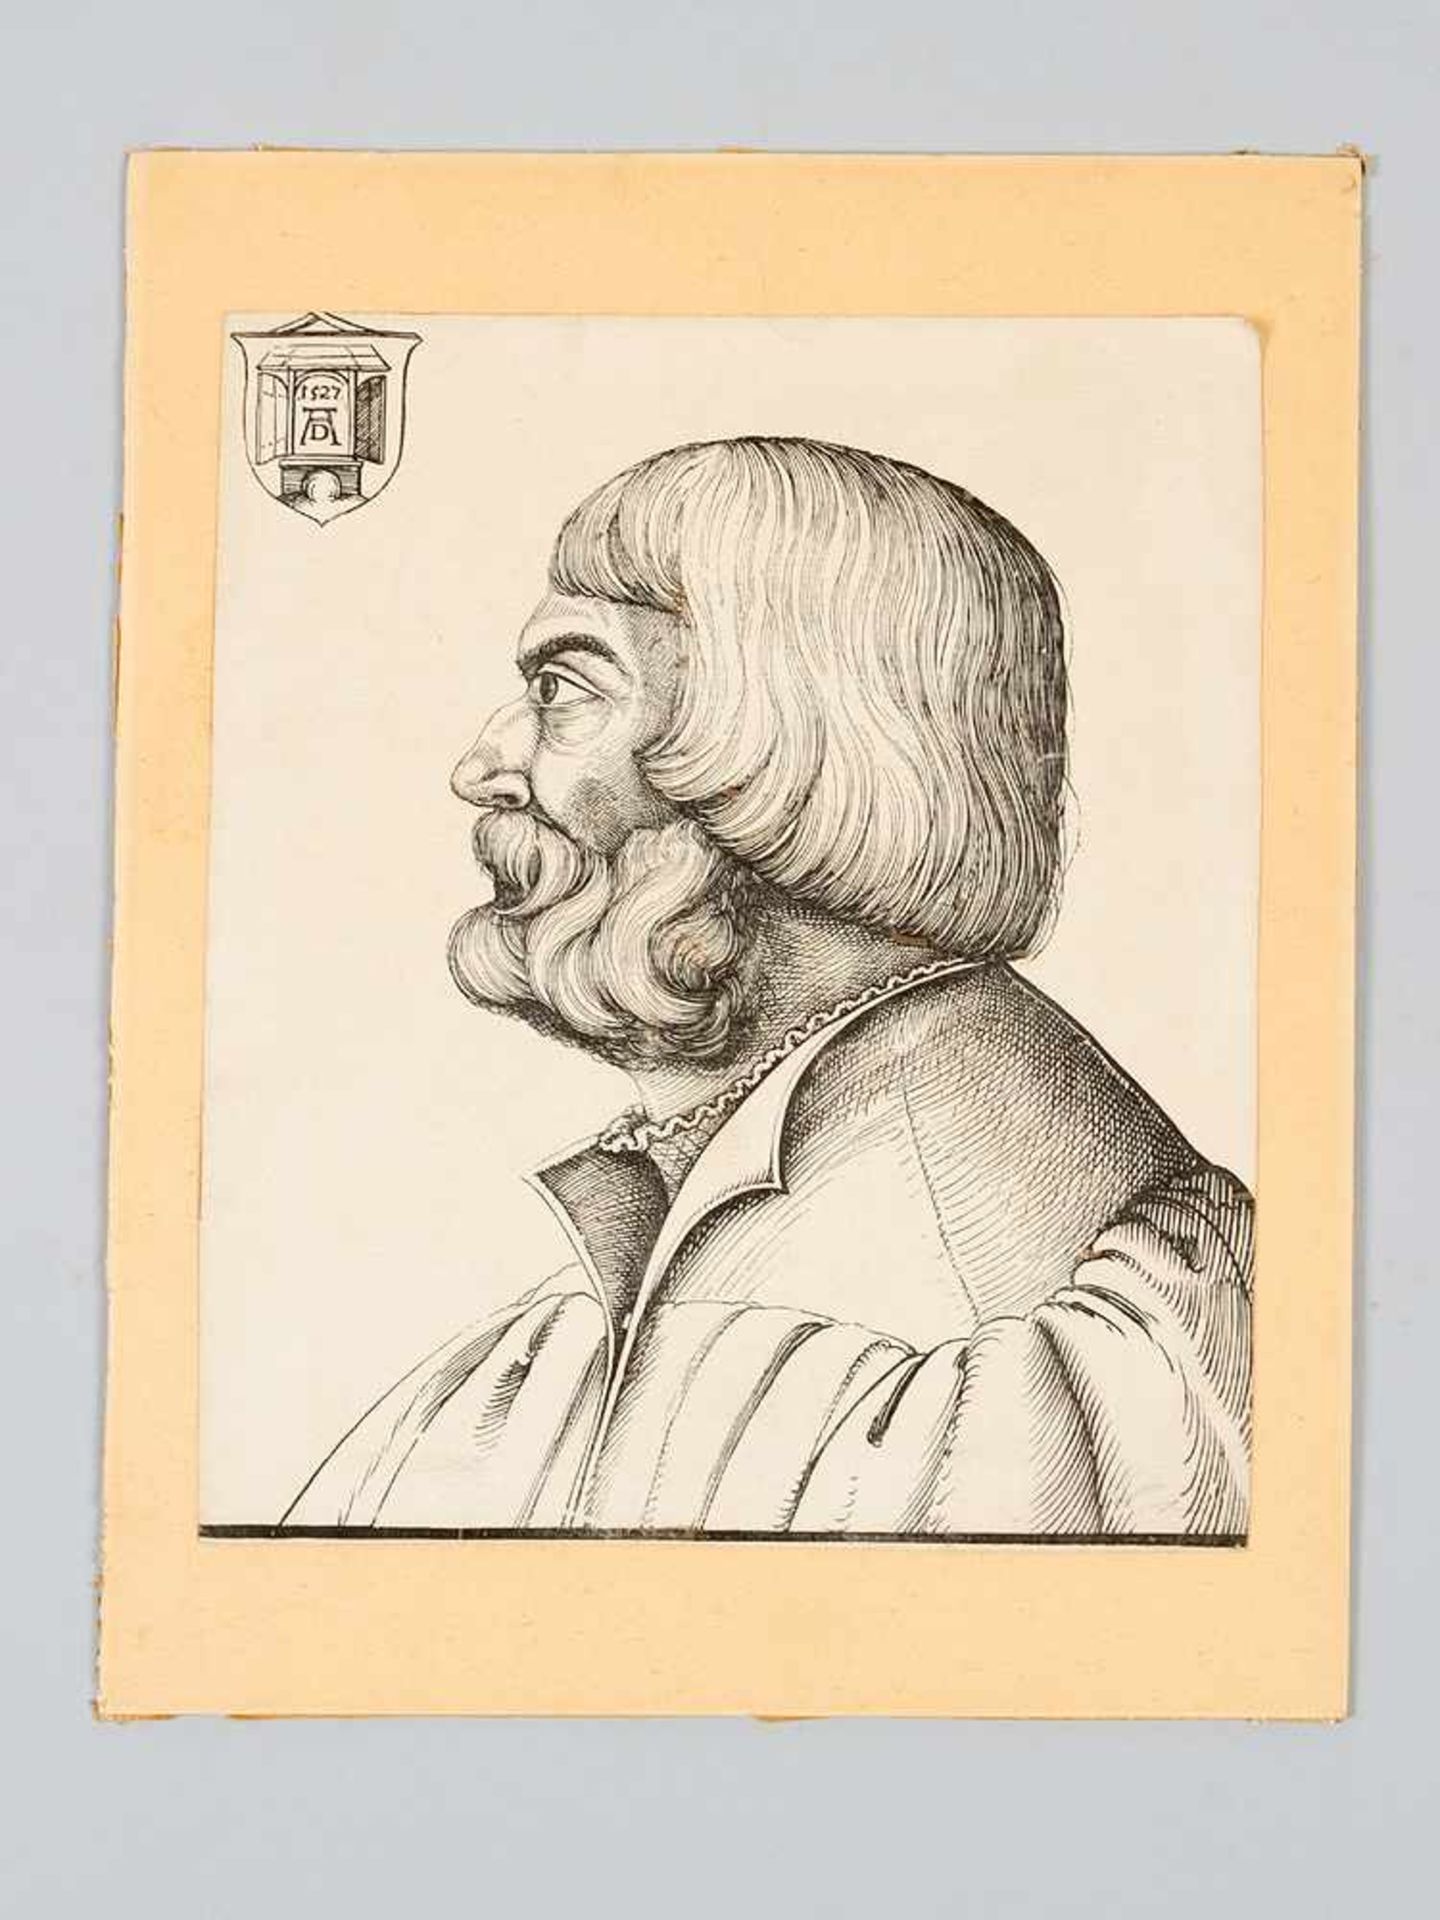 Albrecht Dürer (1471-1528)- Graphic. Woodcut on Paper. Portrait of a men. Upper left monogrammed and